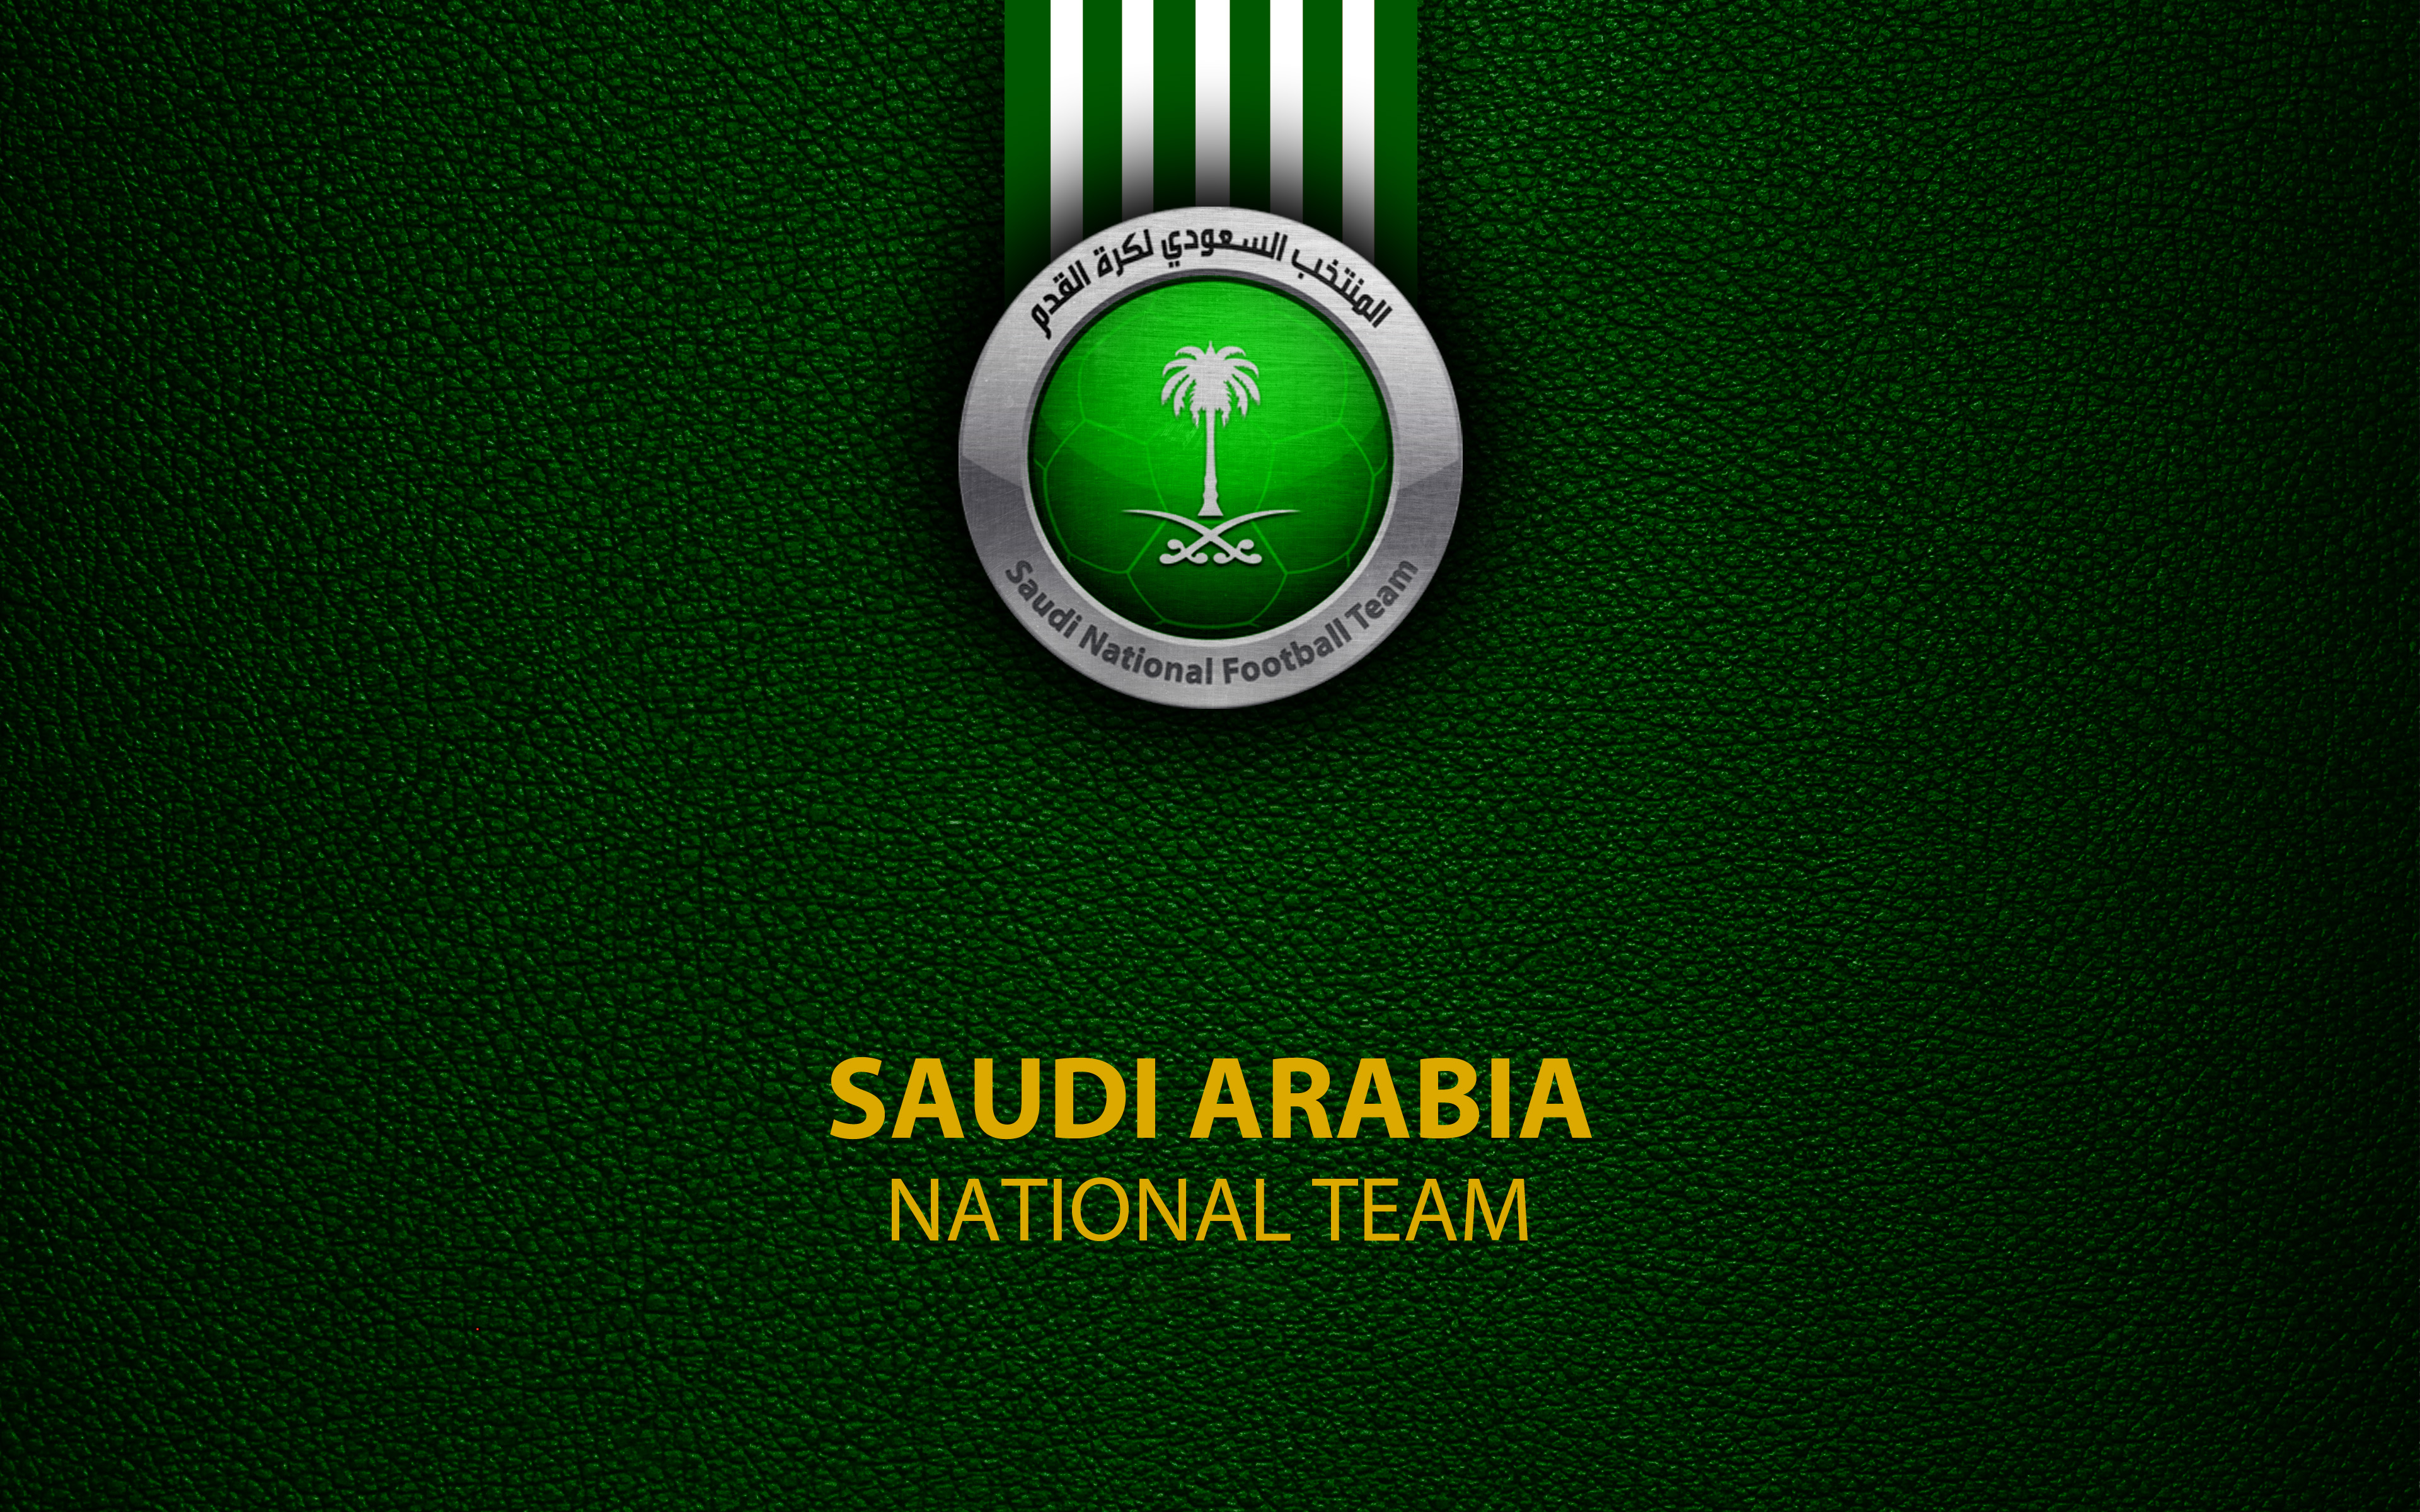 Saudi Arabia National Football Team 4k Ultra HD Wallpaper